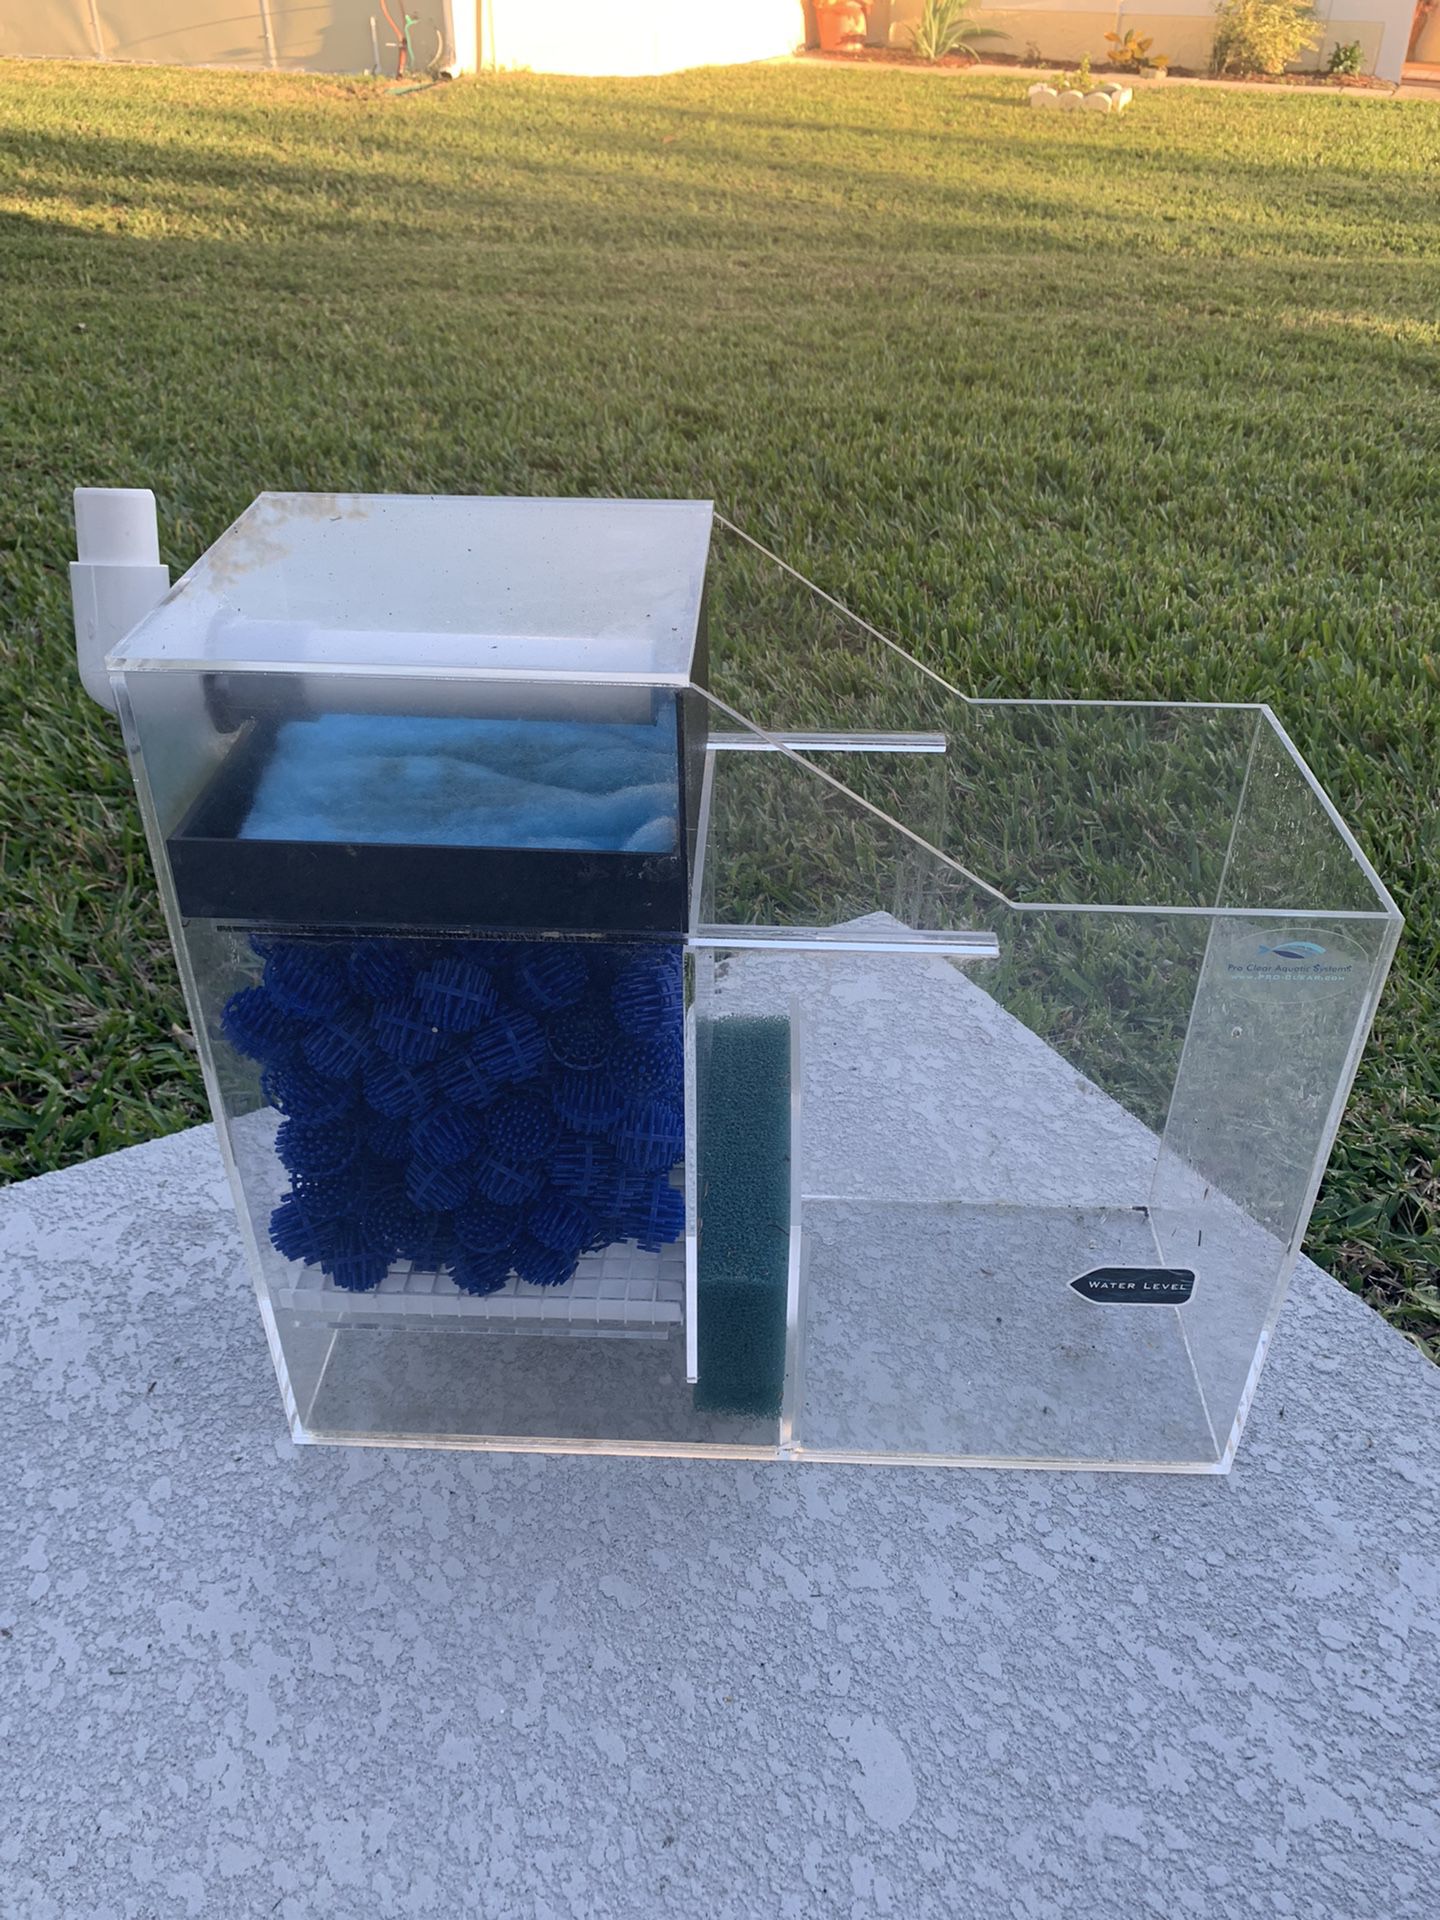 Aquarium Acrylic Sump Filter By Proclear